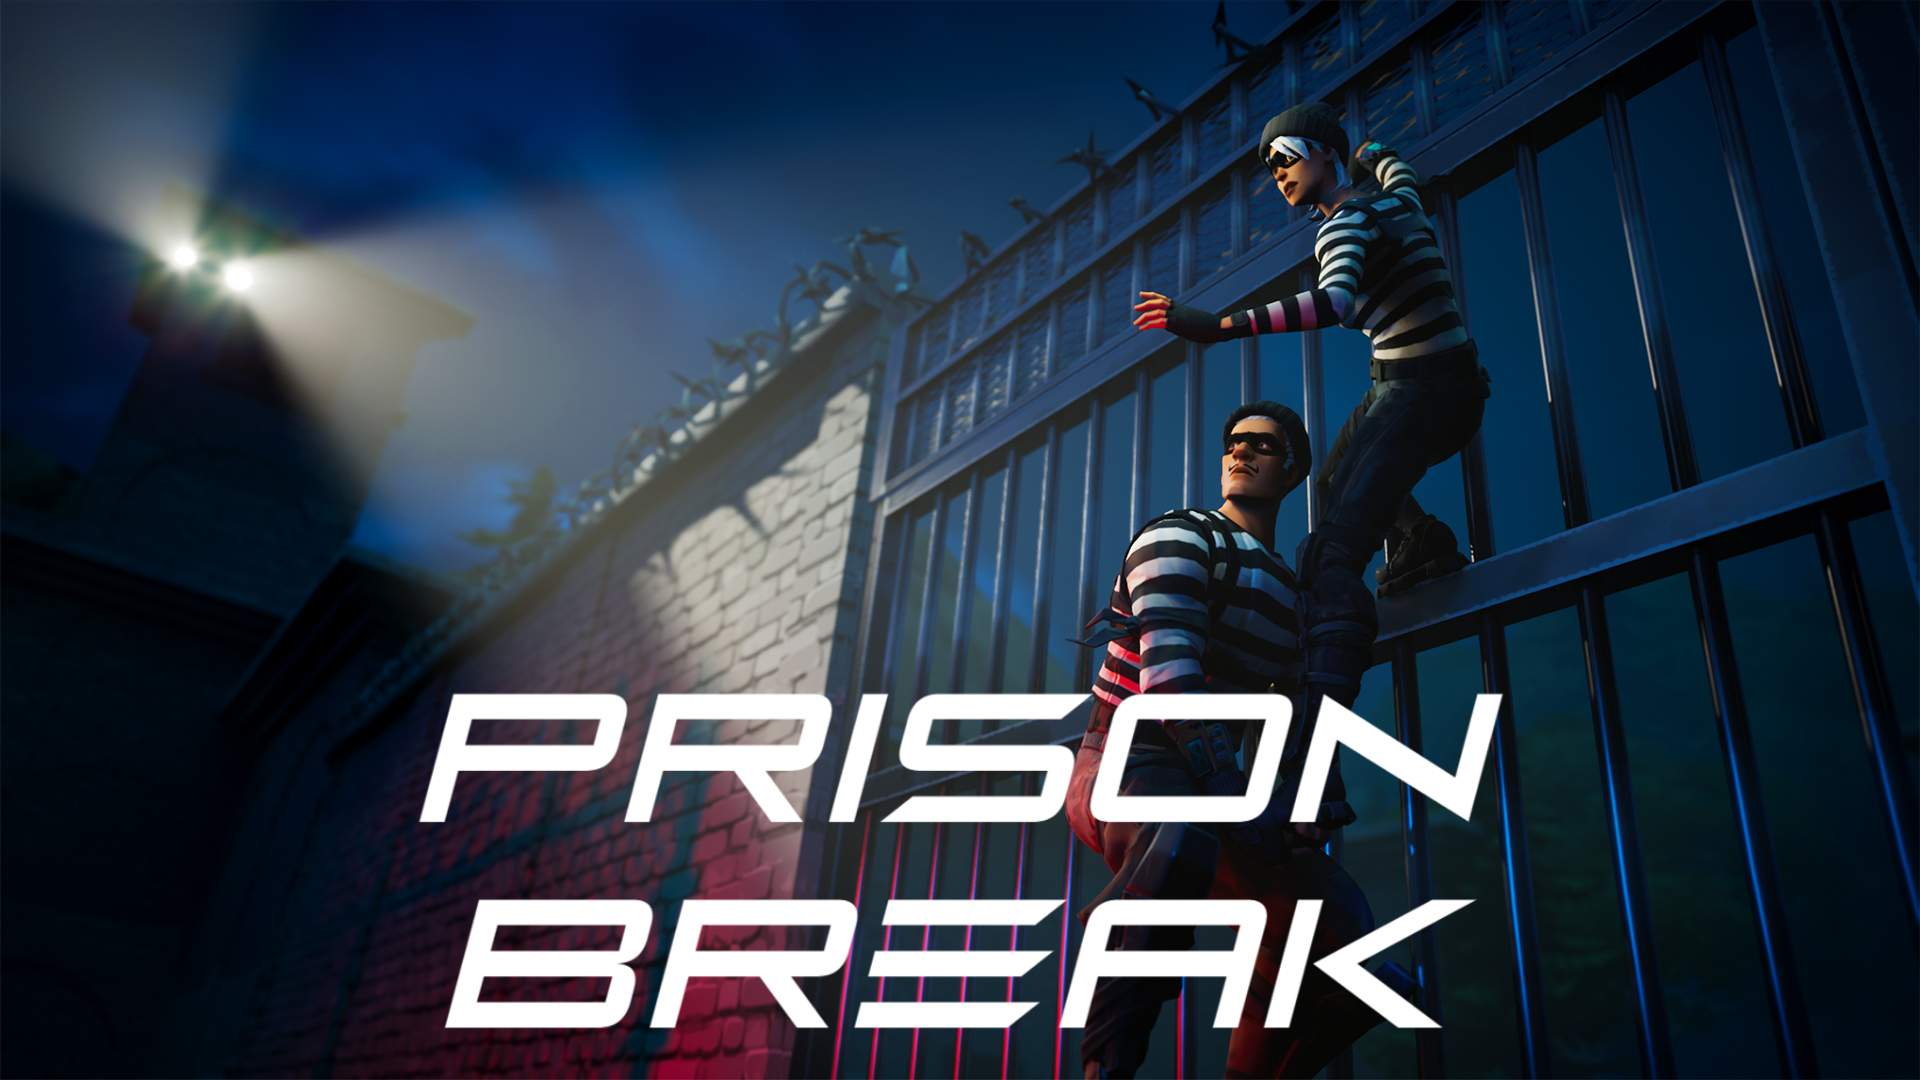 PRISON BREAK